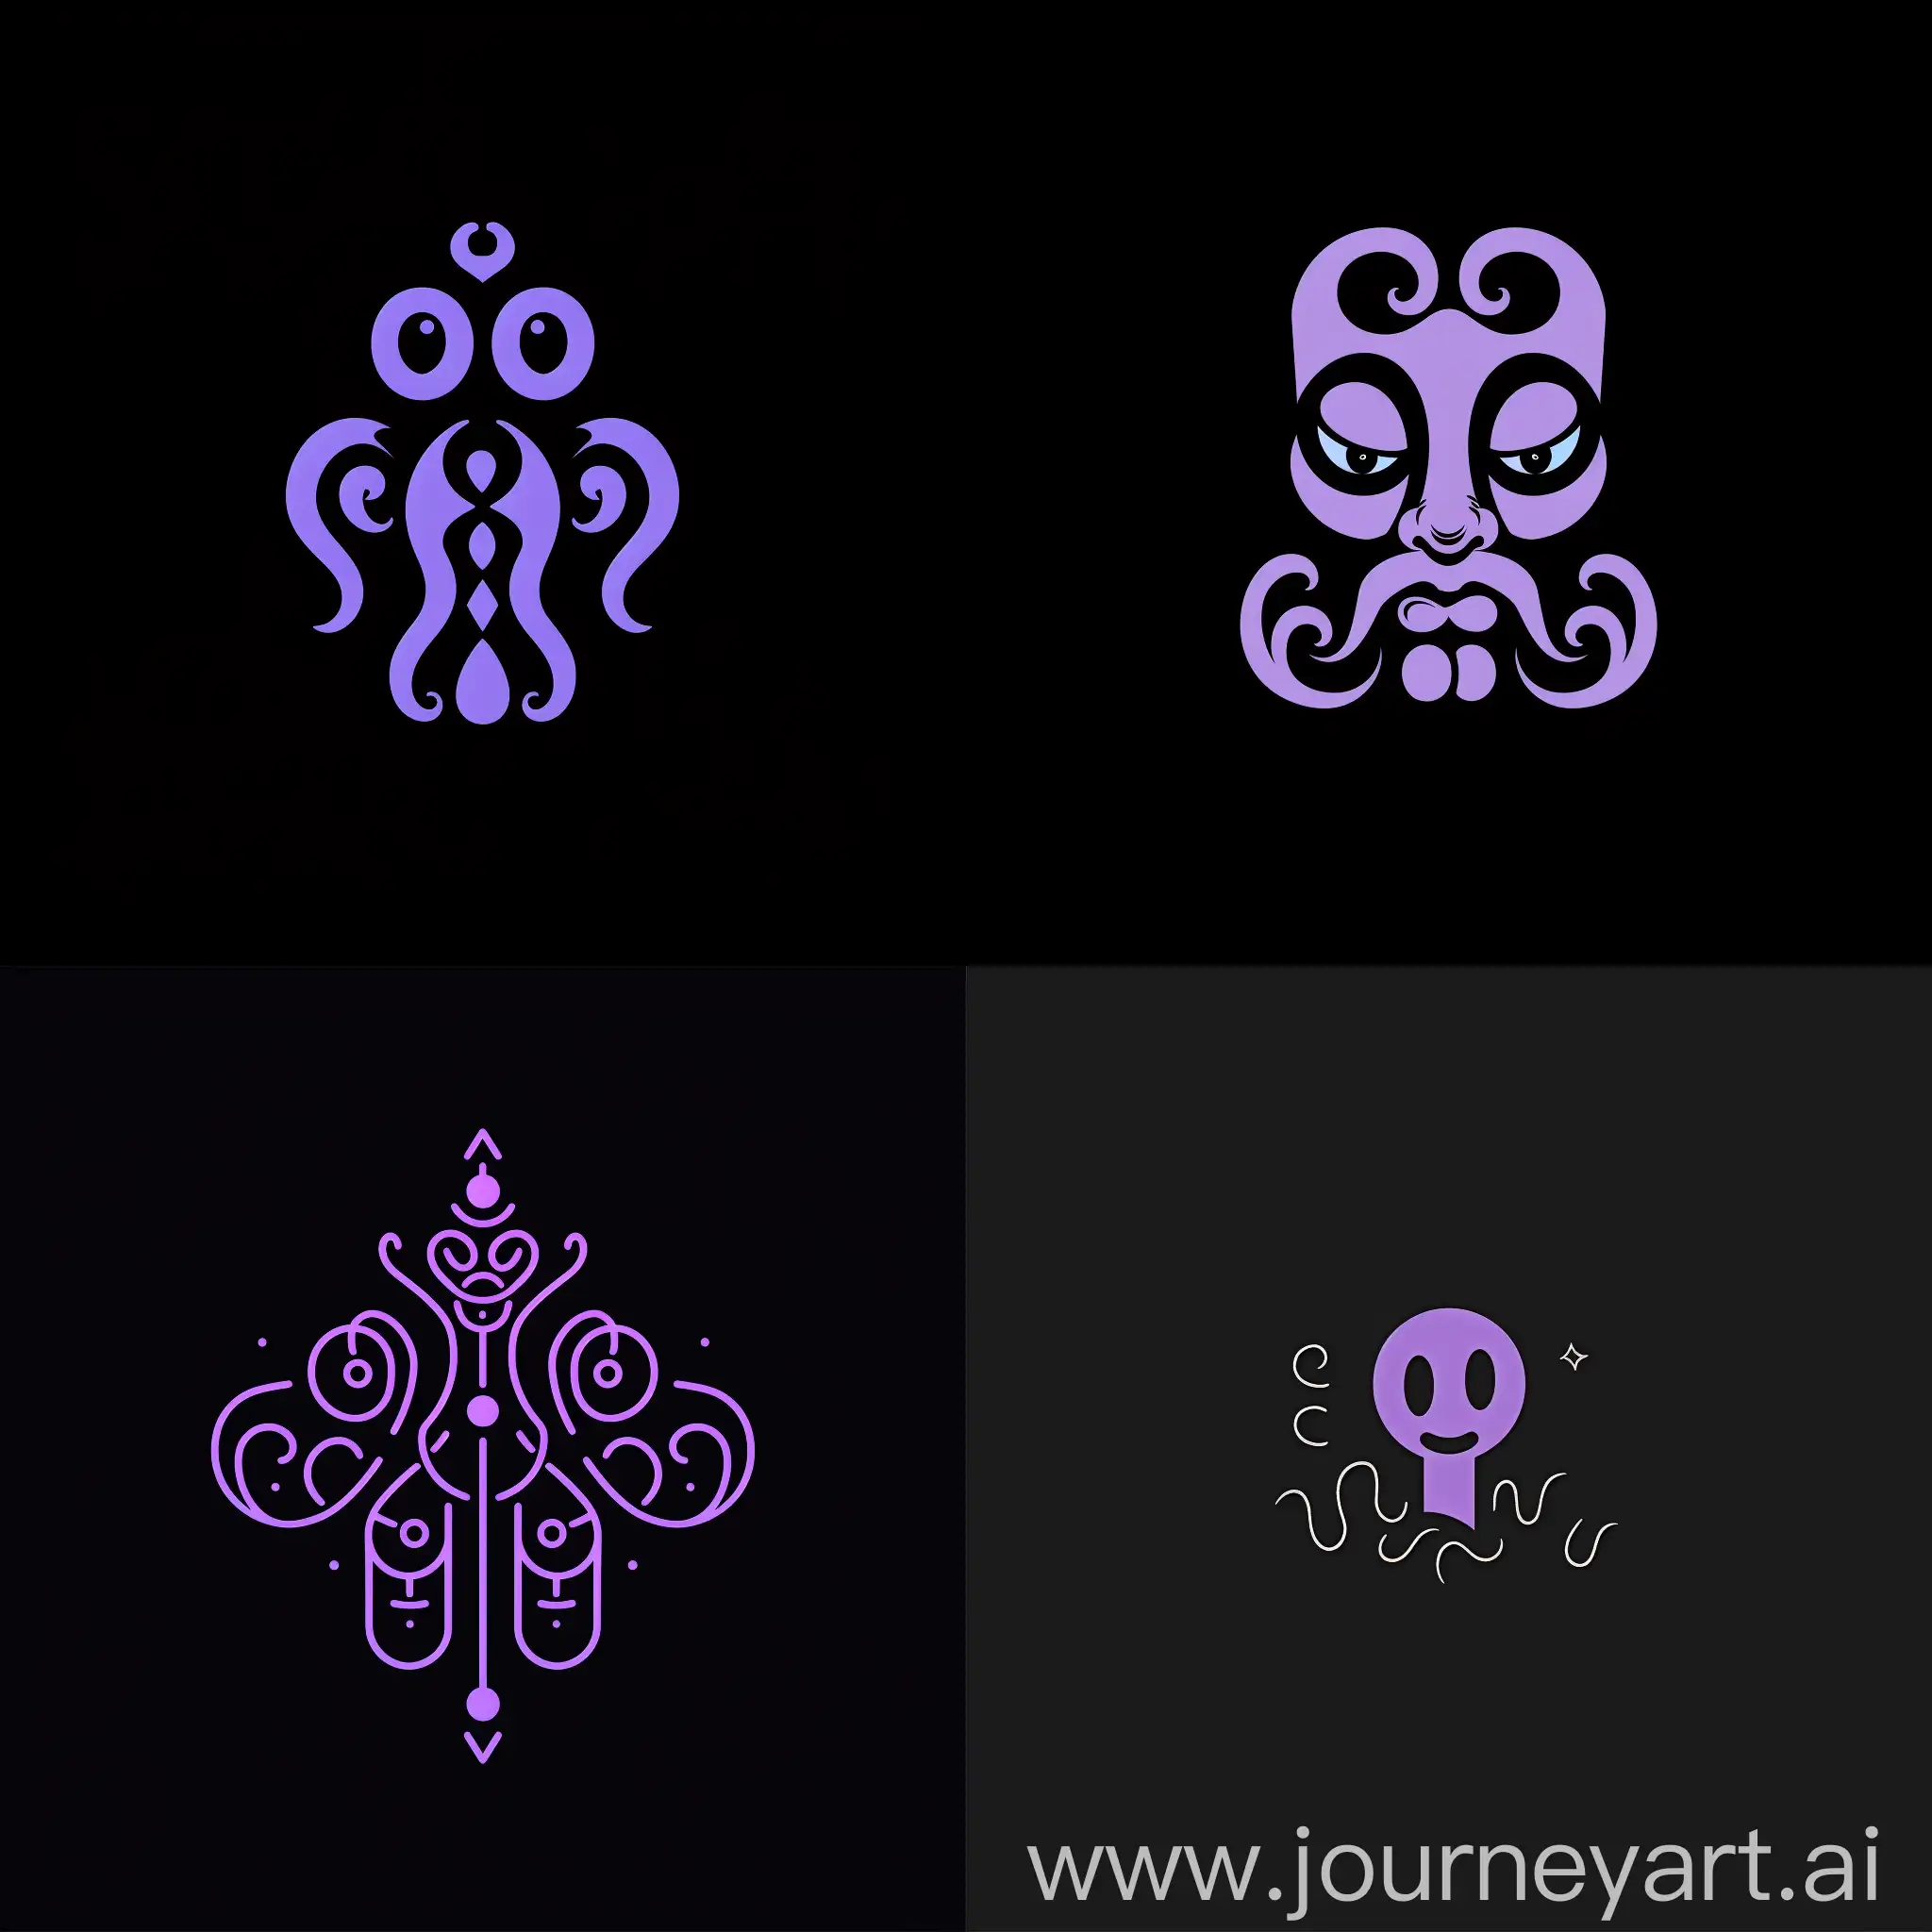 Tim-Burton-Style-Animation-Company-Emblem-with-Purple-and-Black-Aesthetic